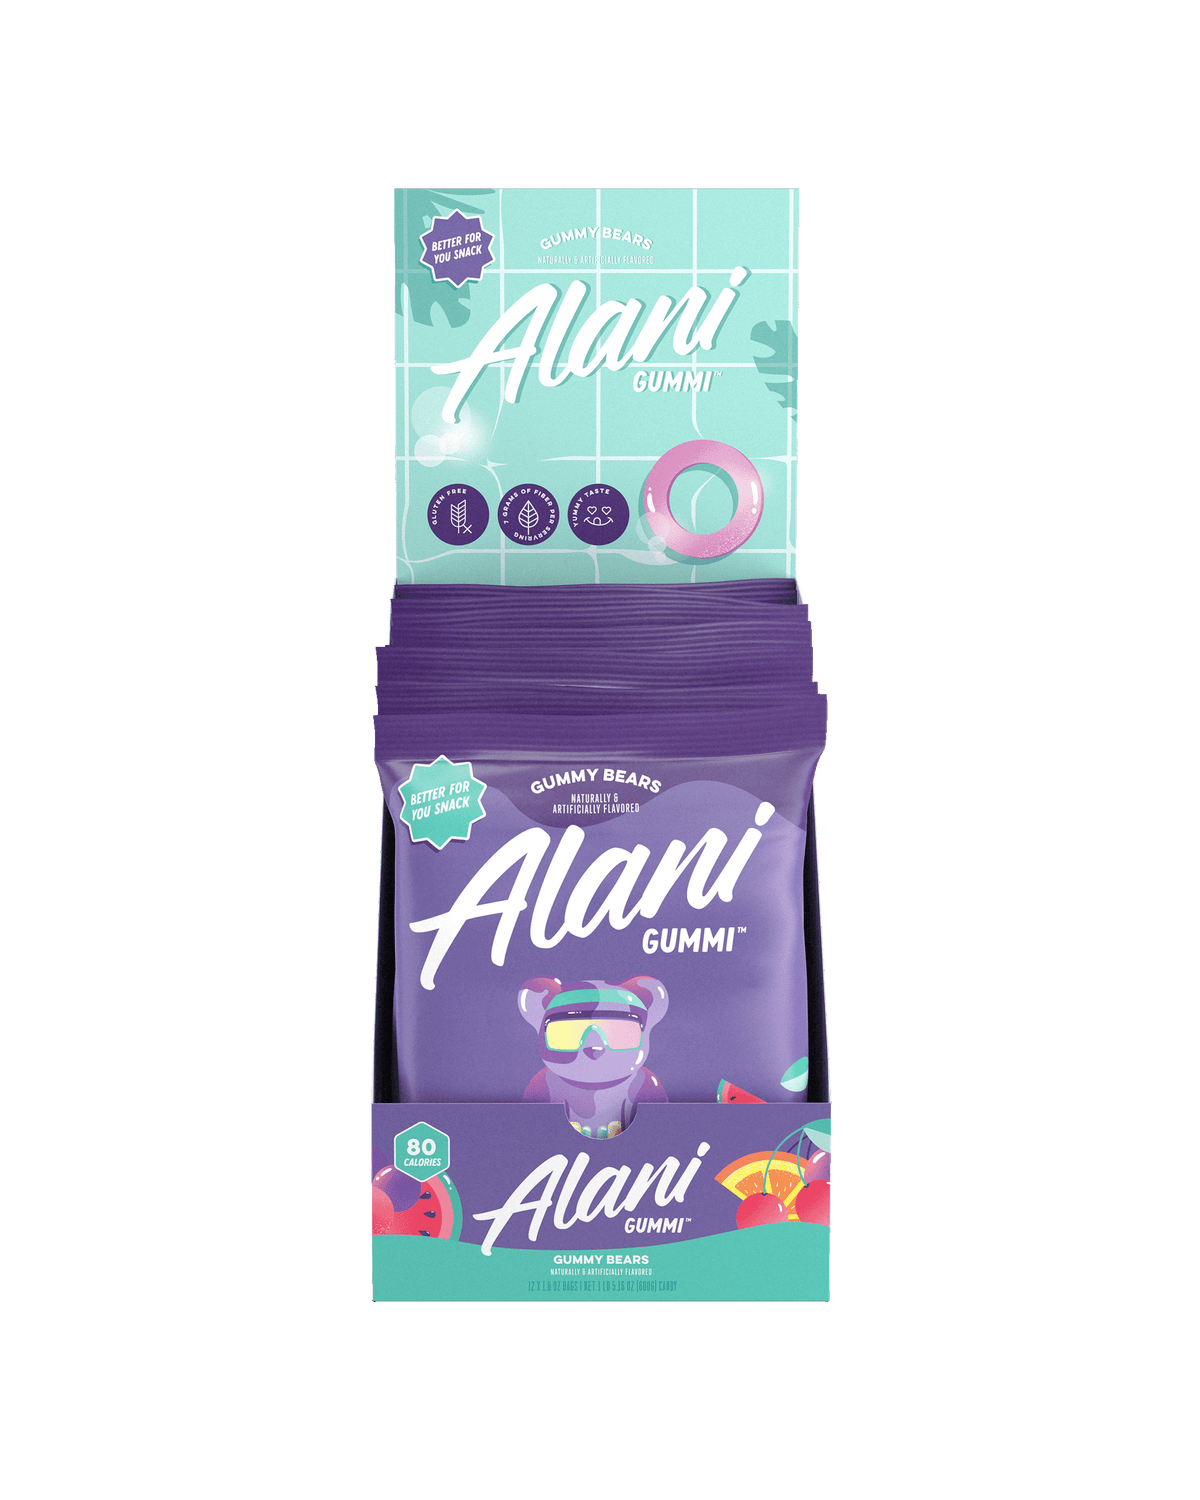 A package of Alani Nu Gummi - Gummy Bears on a 12pk carton display